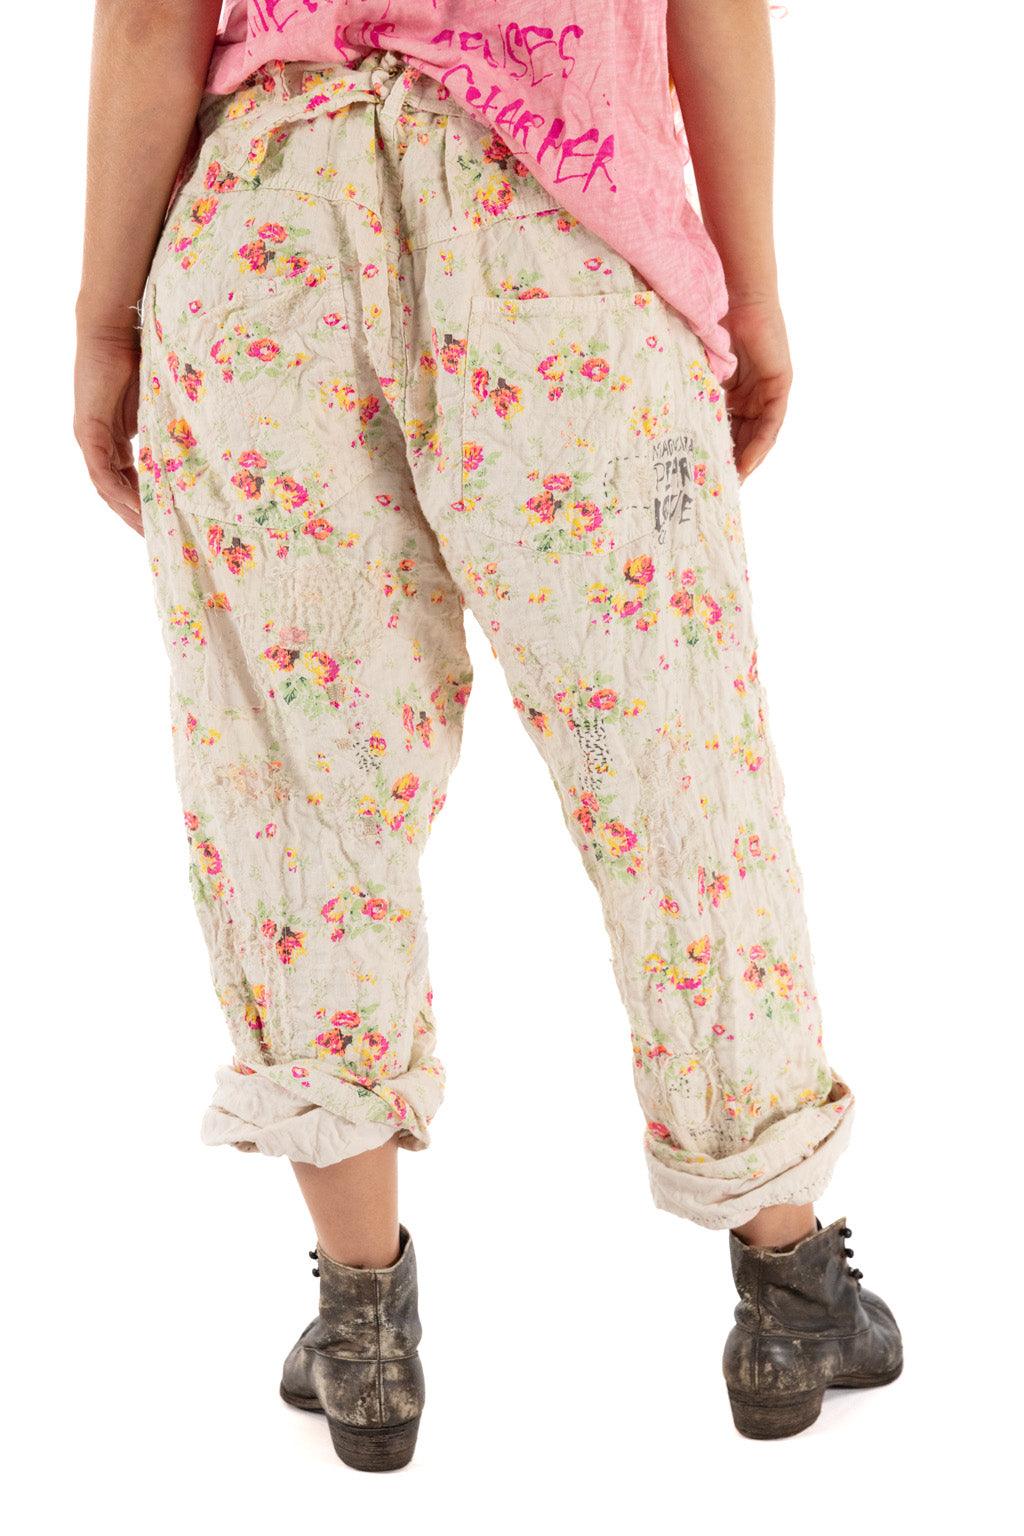 Cotton Linen Miner Pants - Magnolia Pearl Clothing